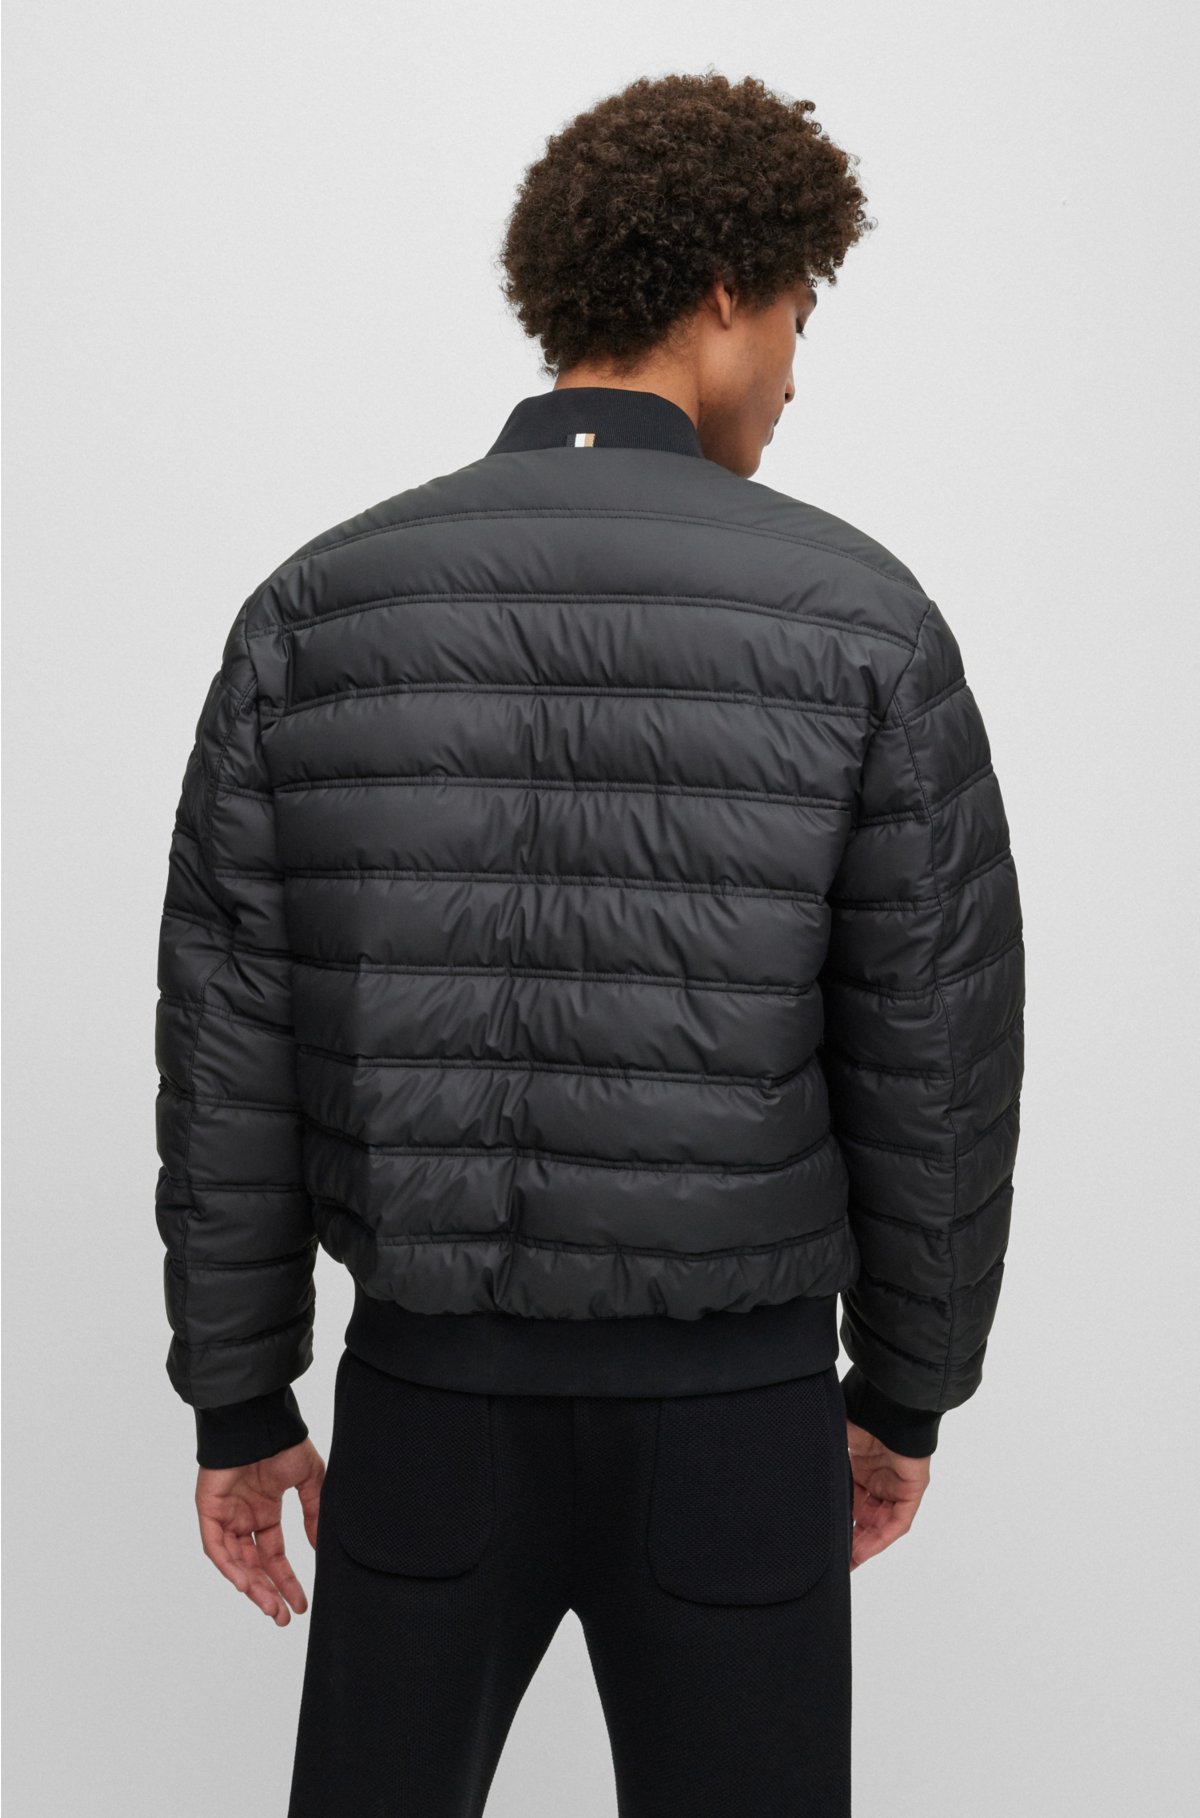 BOSS - Water-repellent puffer jacket with two-way zip